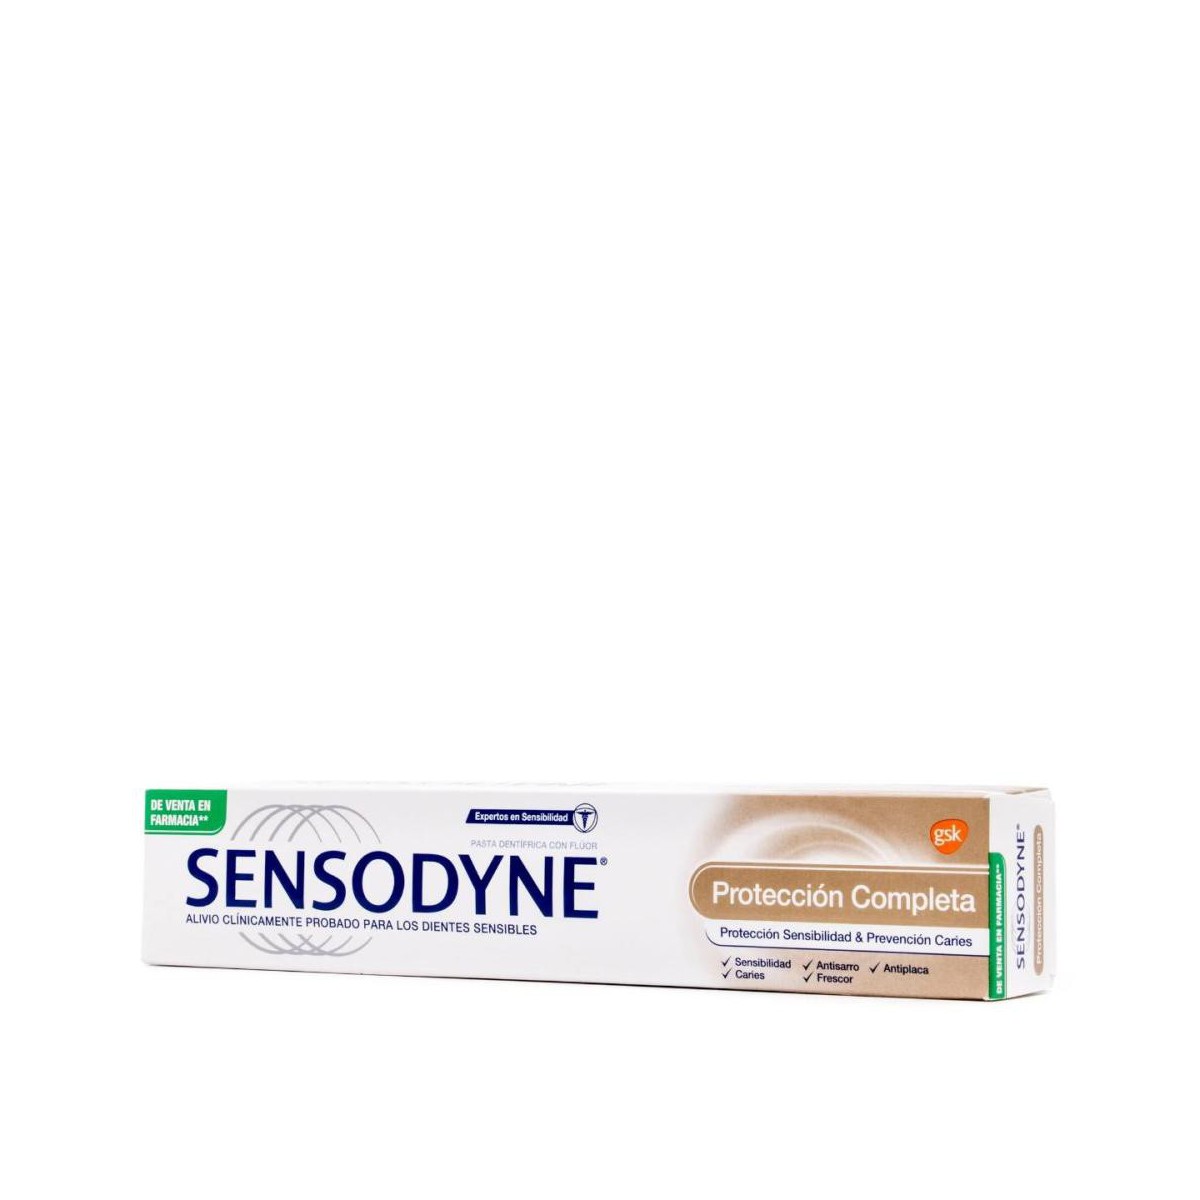 Sensodyne Protes Completa 75ml